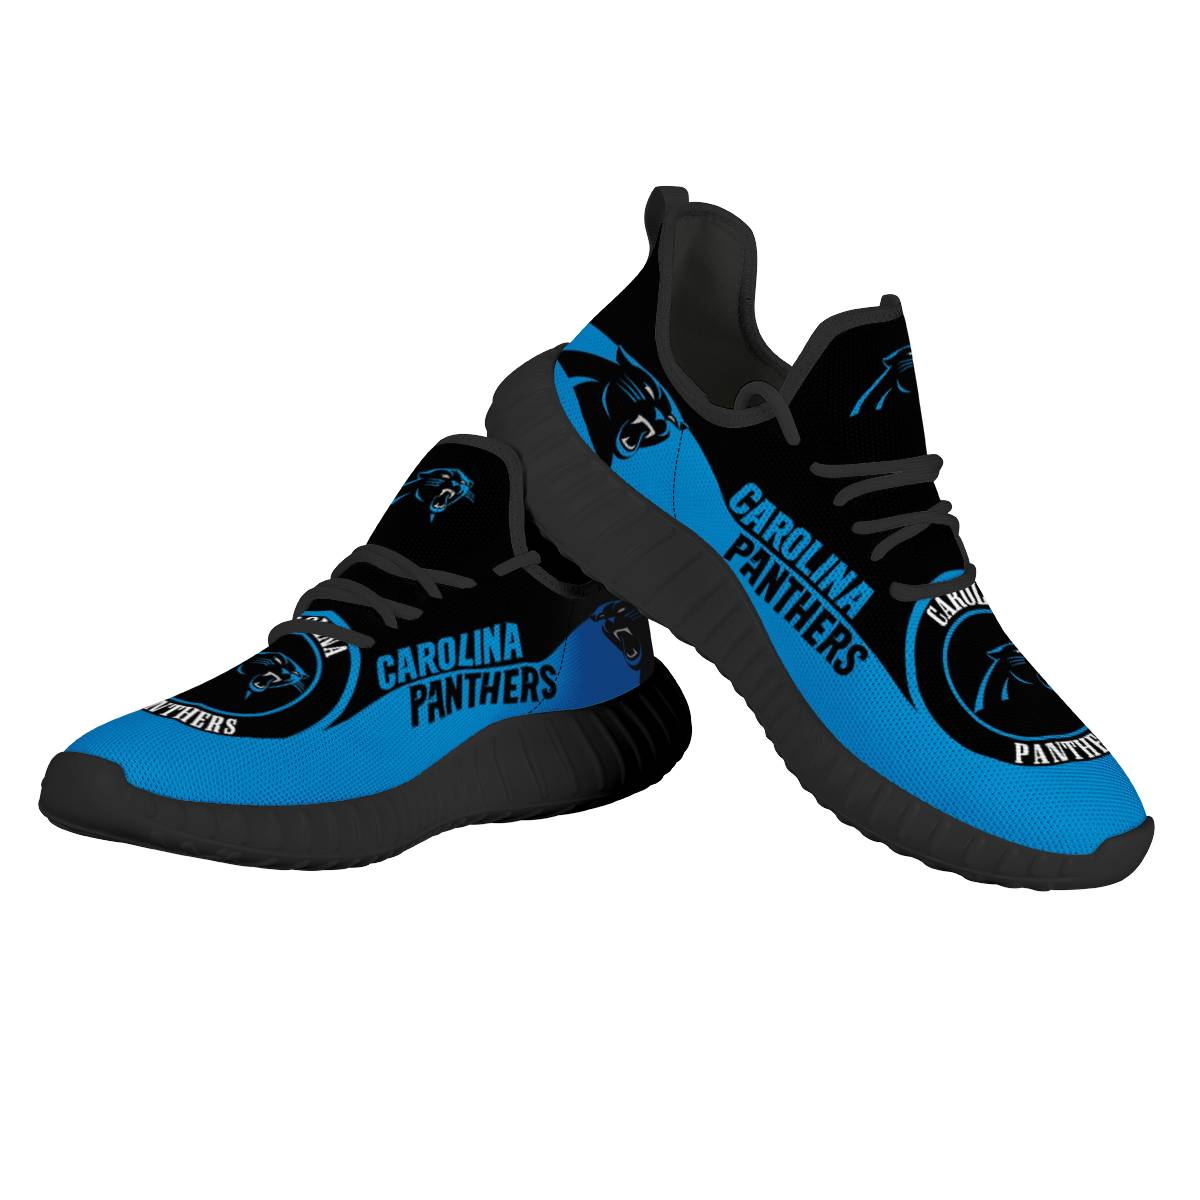 Women's Carolina Panthers Mesh Knit Sneakers/Shoes 003